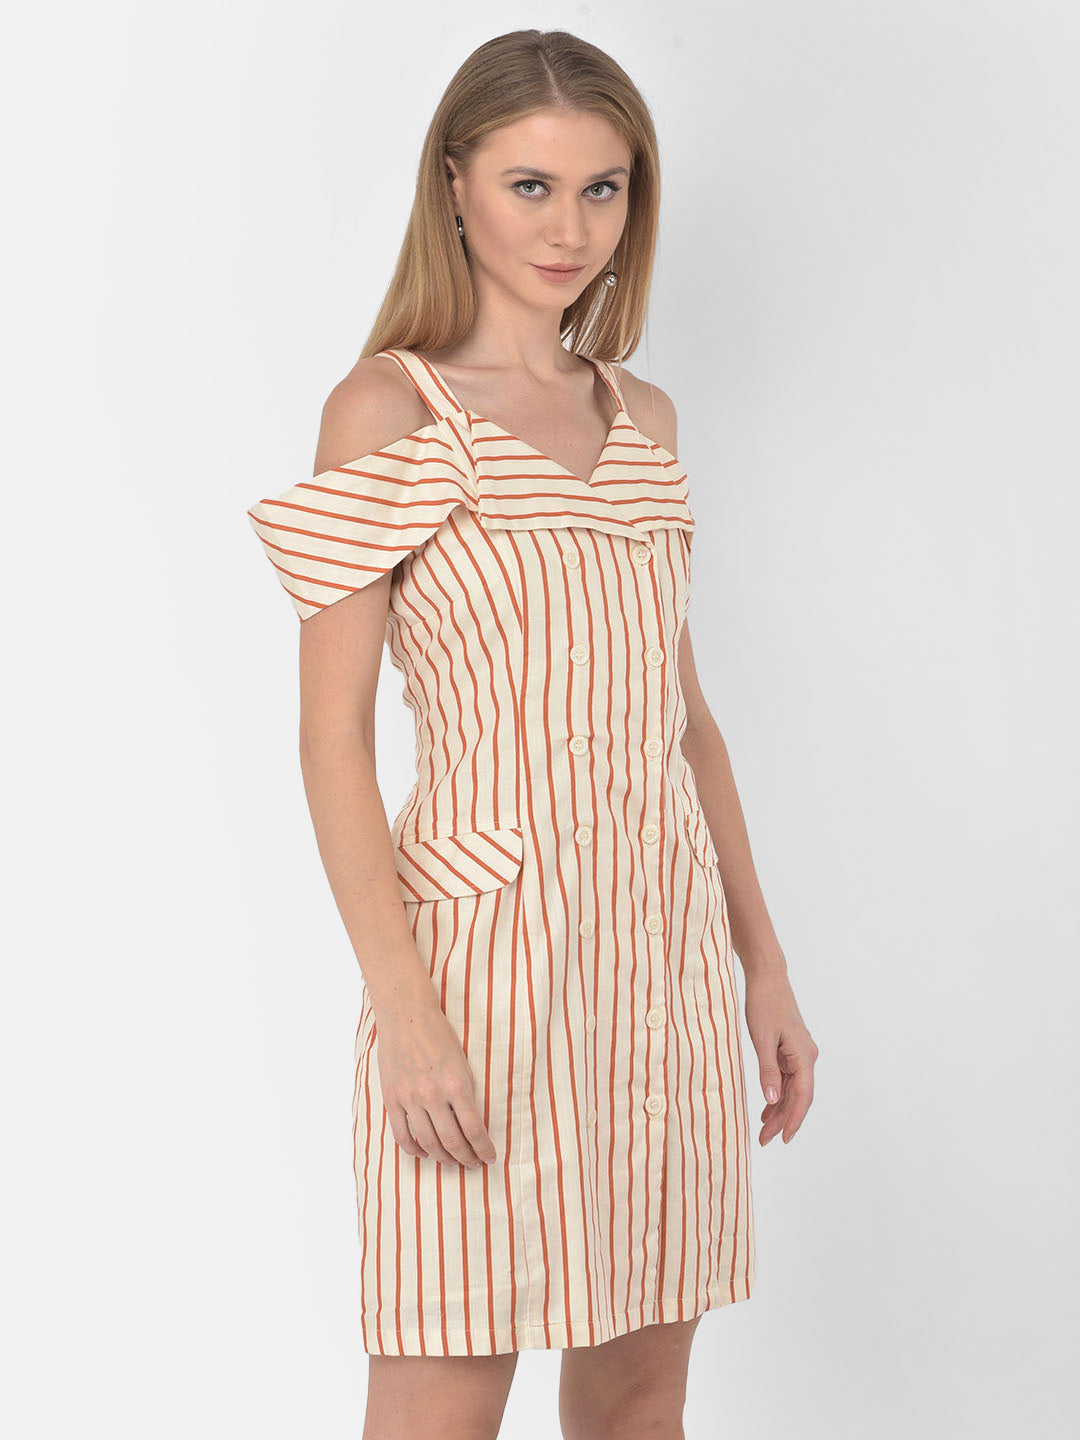 Beige Cap Sleeve A-Line Dress With Pokcet